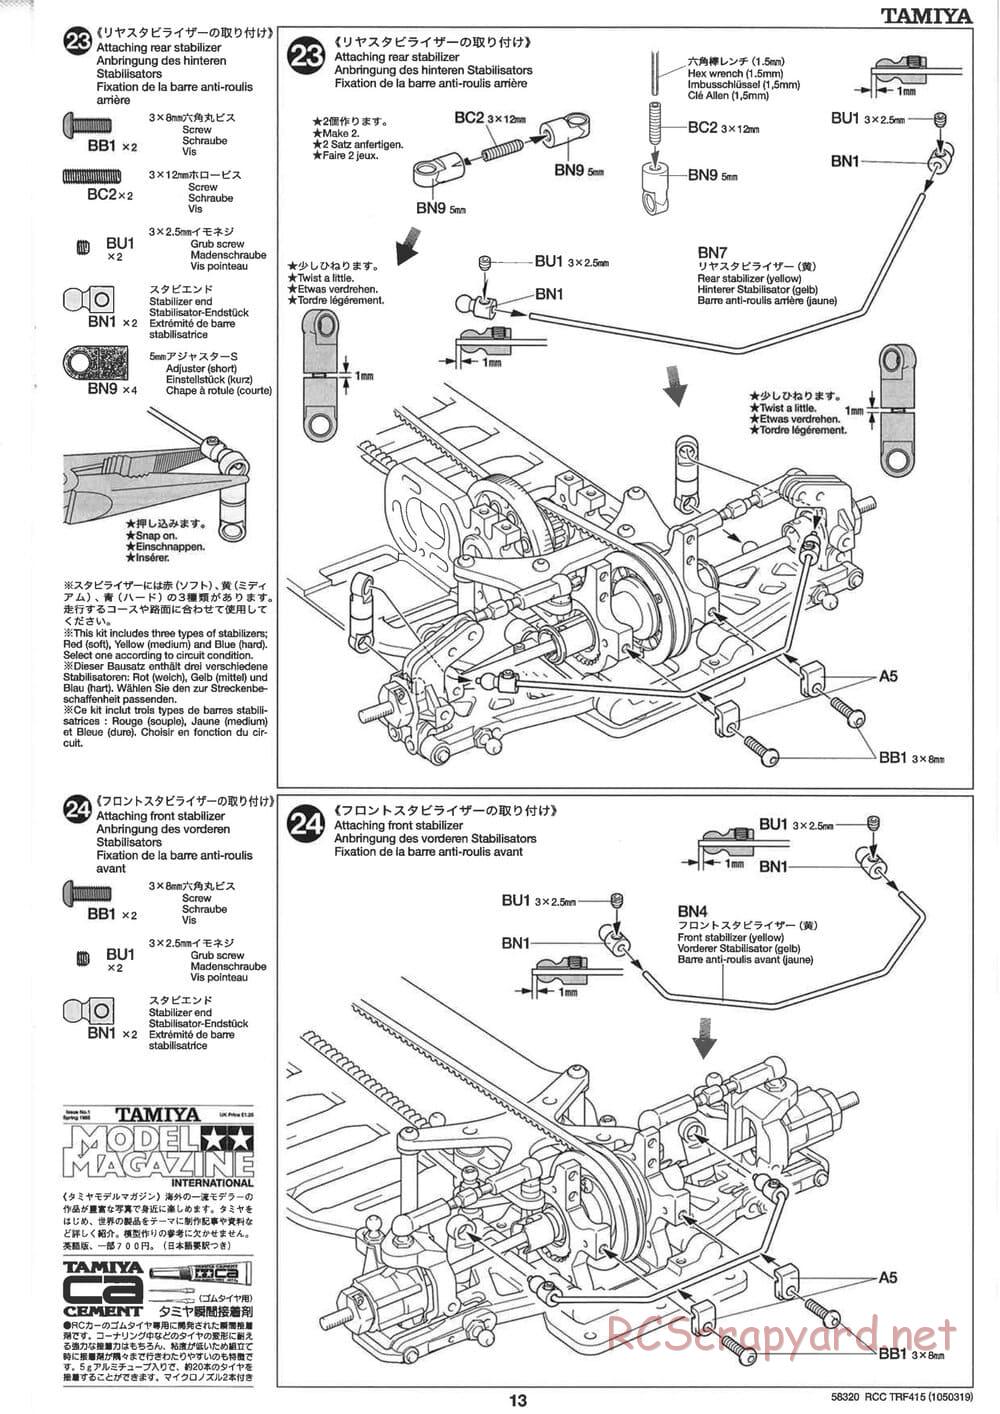 Tamiya - TRF415 Chassis - Manual - Page 13